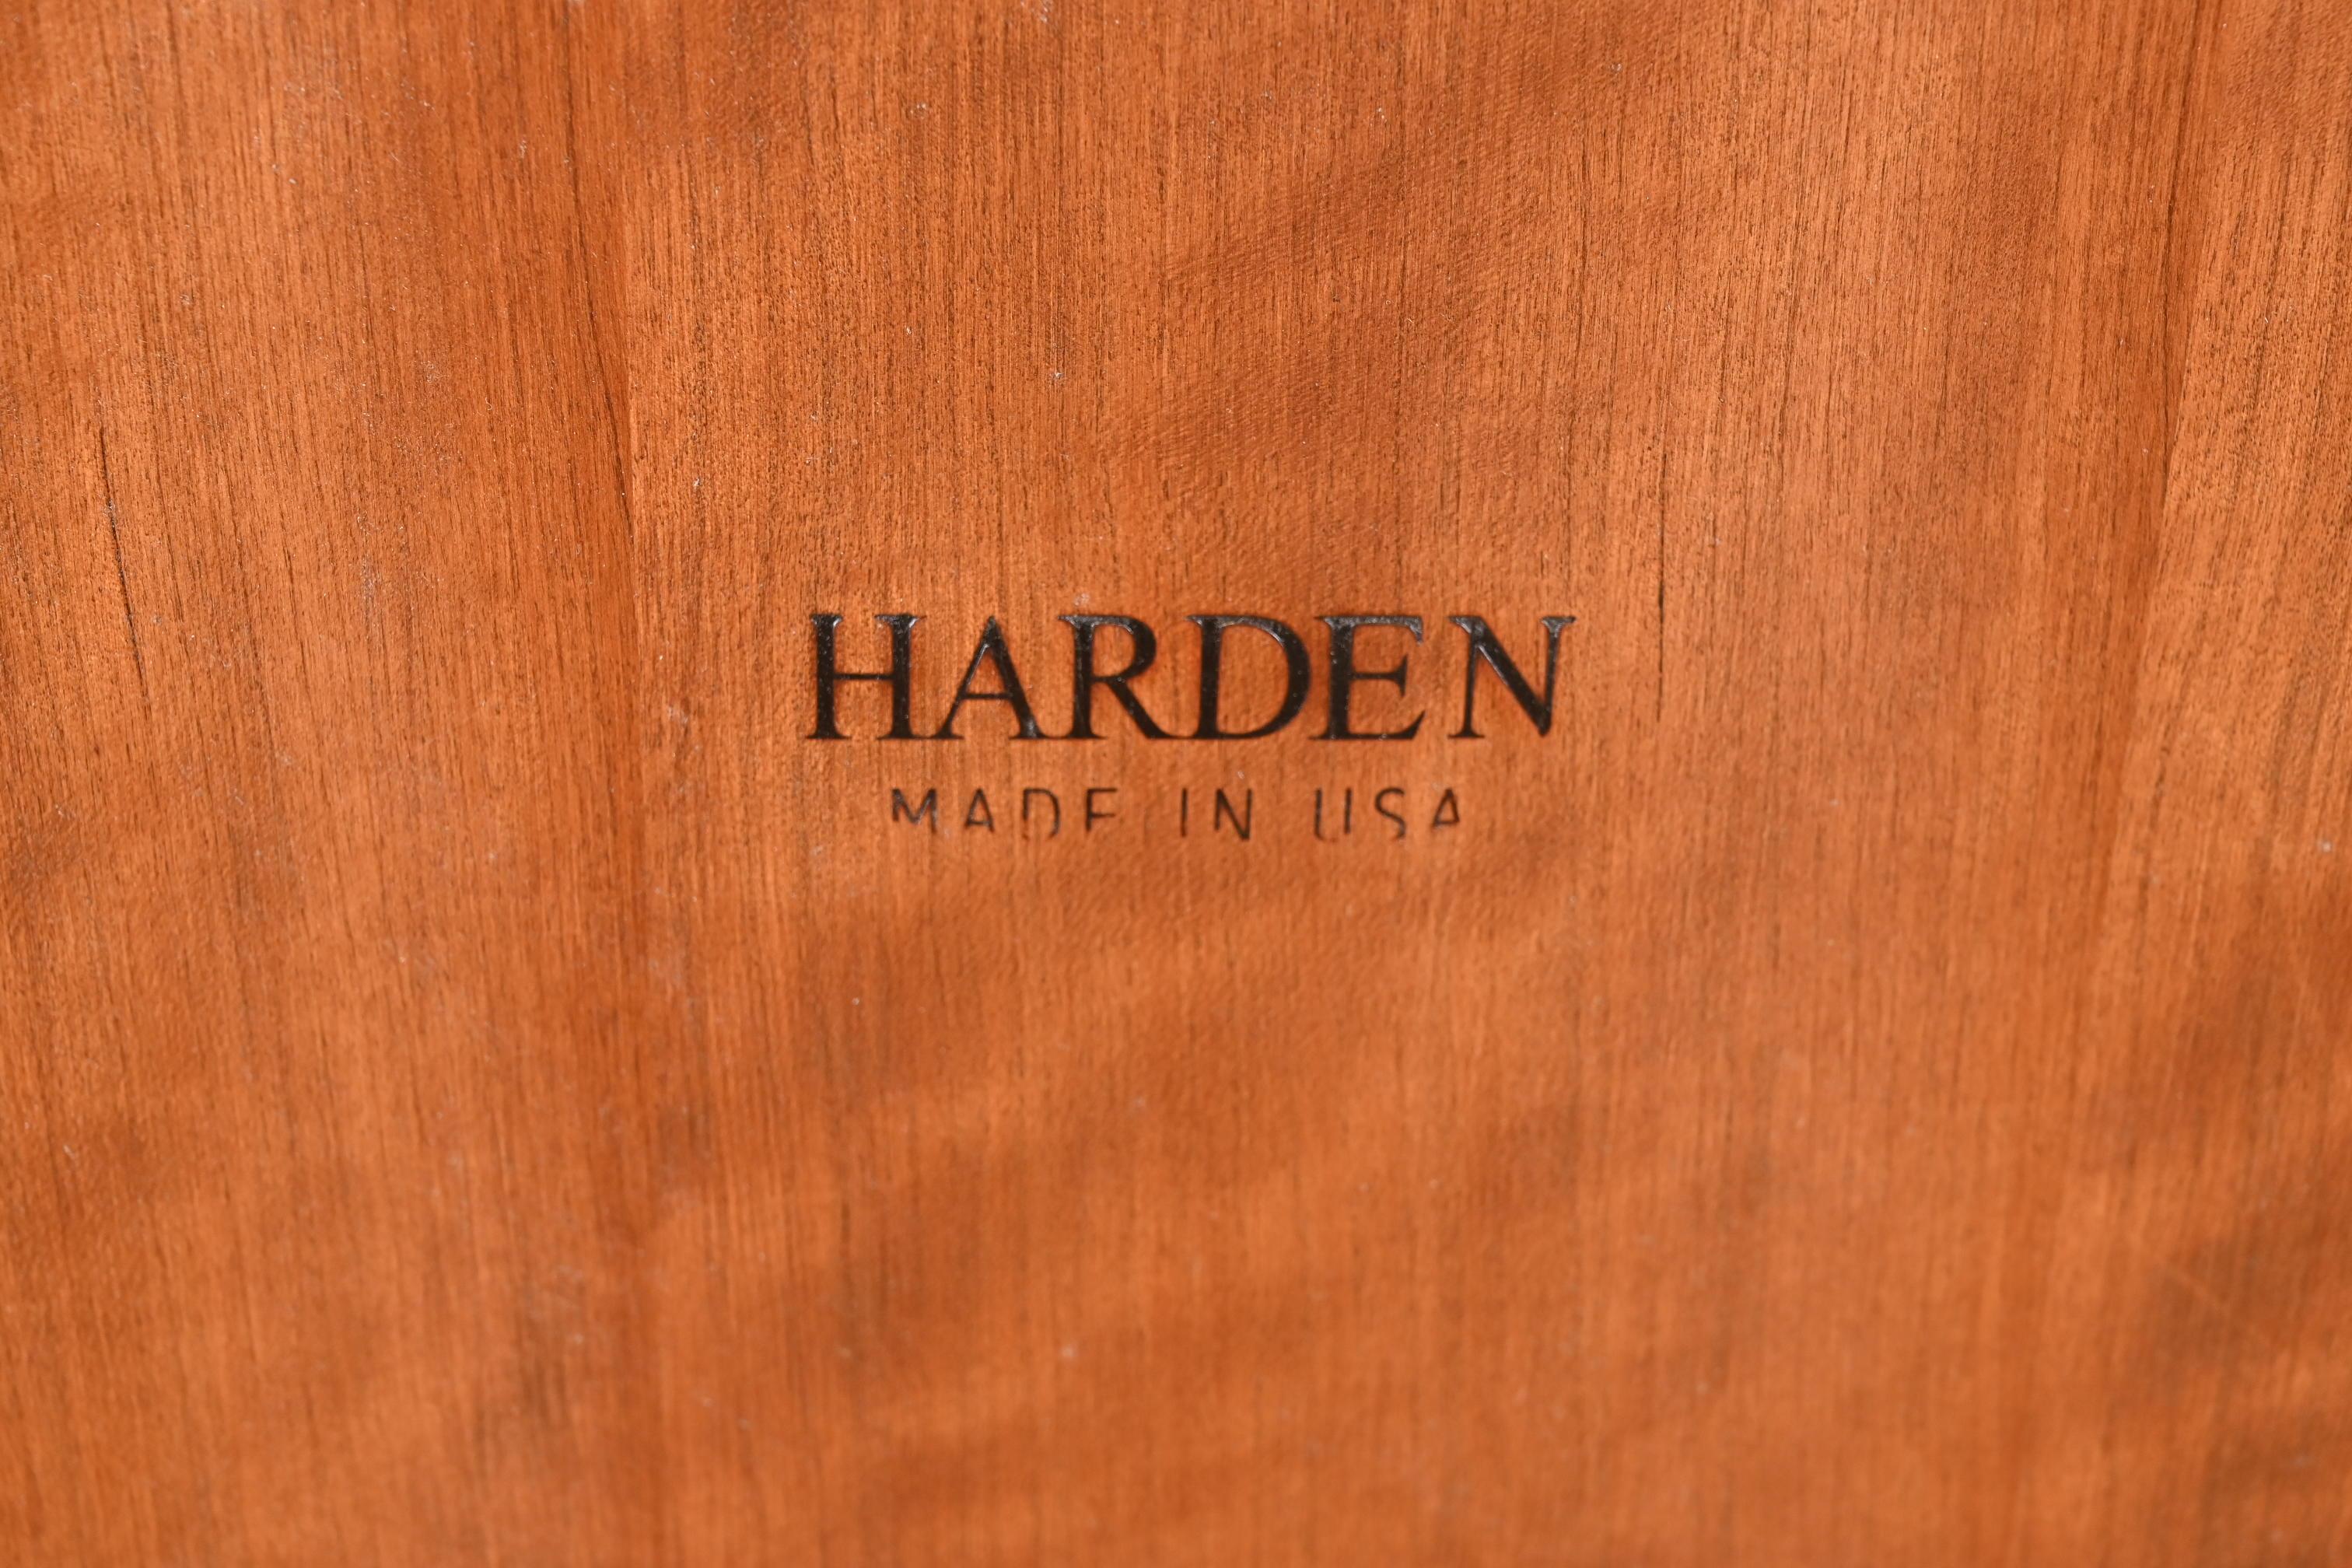 Harden Furniture Regency Inlaid Starburst Parquetry Cherry Wood Side Tables 4